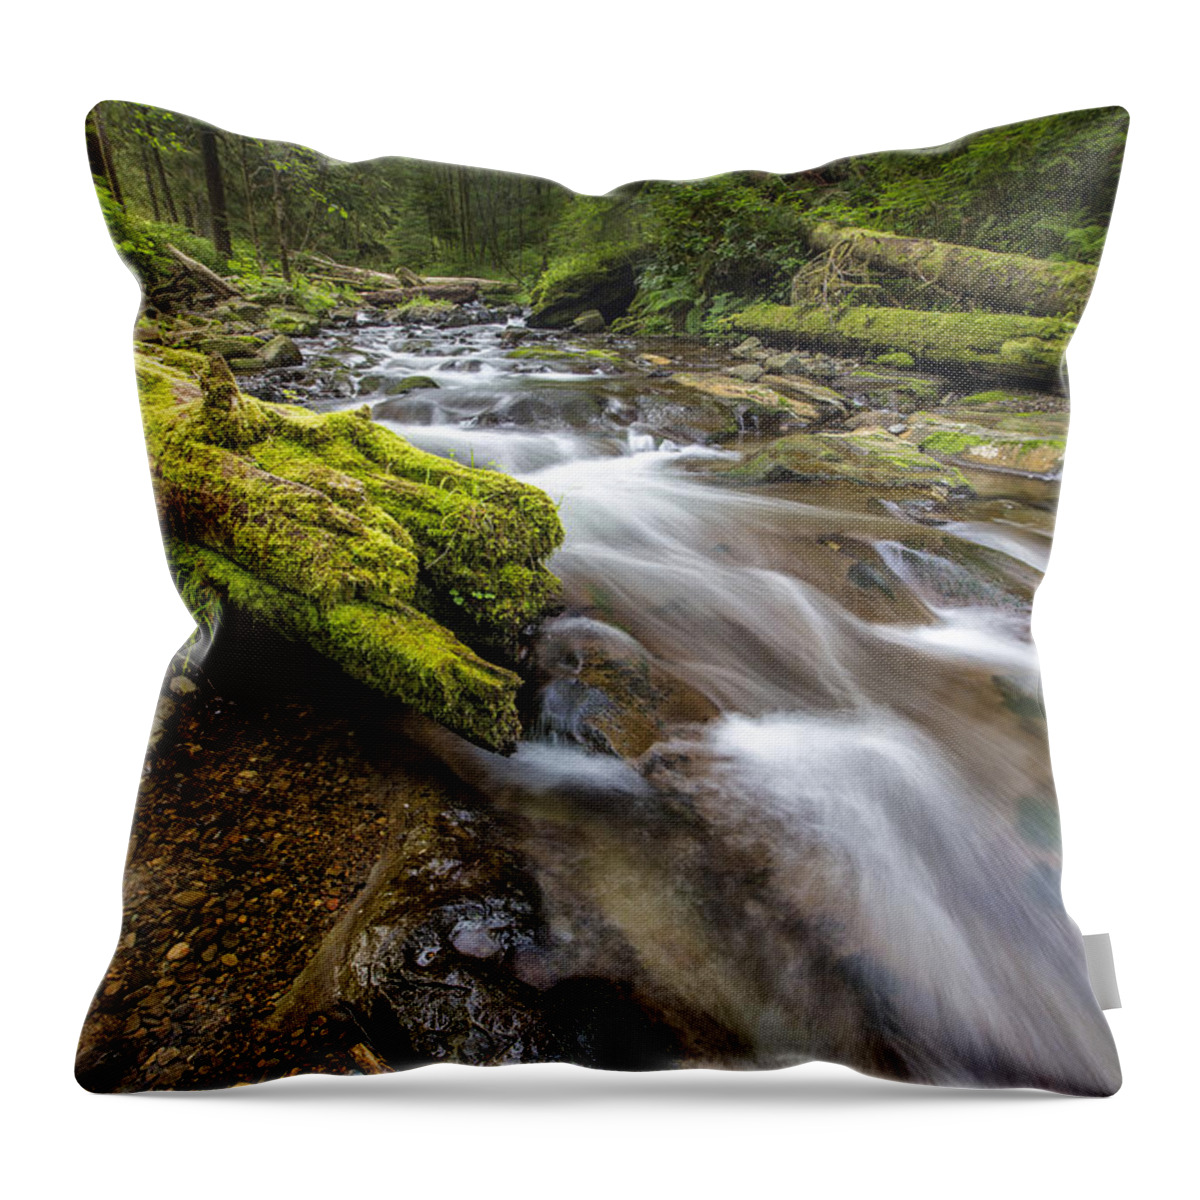 Horizontal Throw Pillow featuring the photograph Rush Rush by Jon Glaser